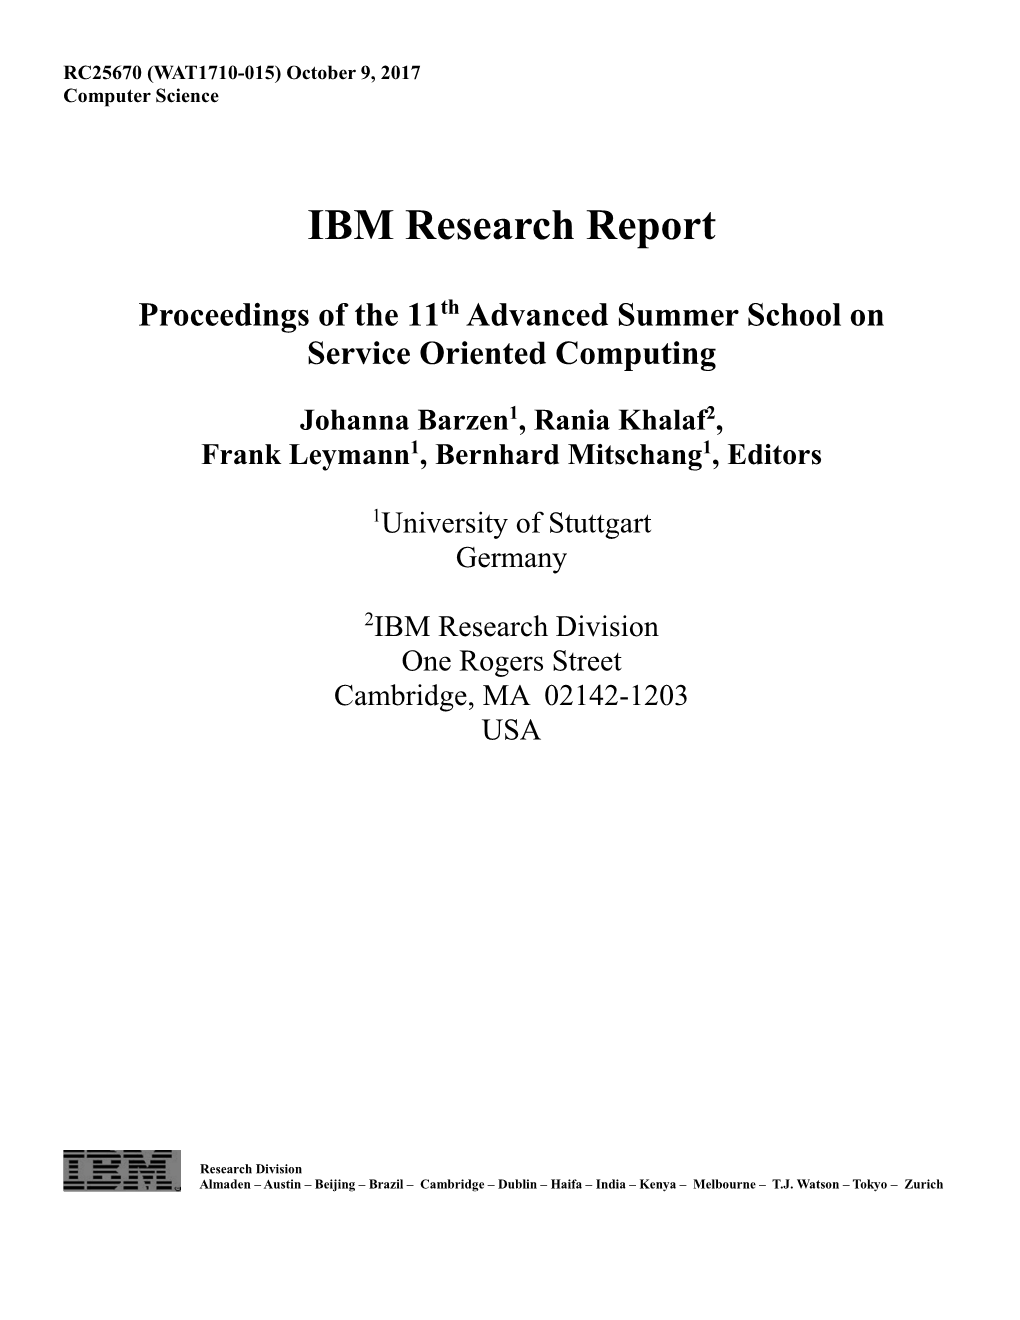 IBM Research Report Proceedings of the 11Th Advanced Summer School on Service Oriented Computing Johanna Barzen1, Rania Khalaf2, Frank Leymann1, Bernhard Mitschang1, Editors